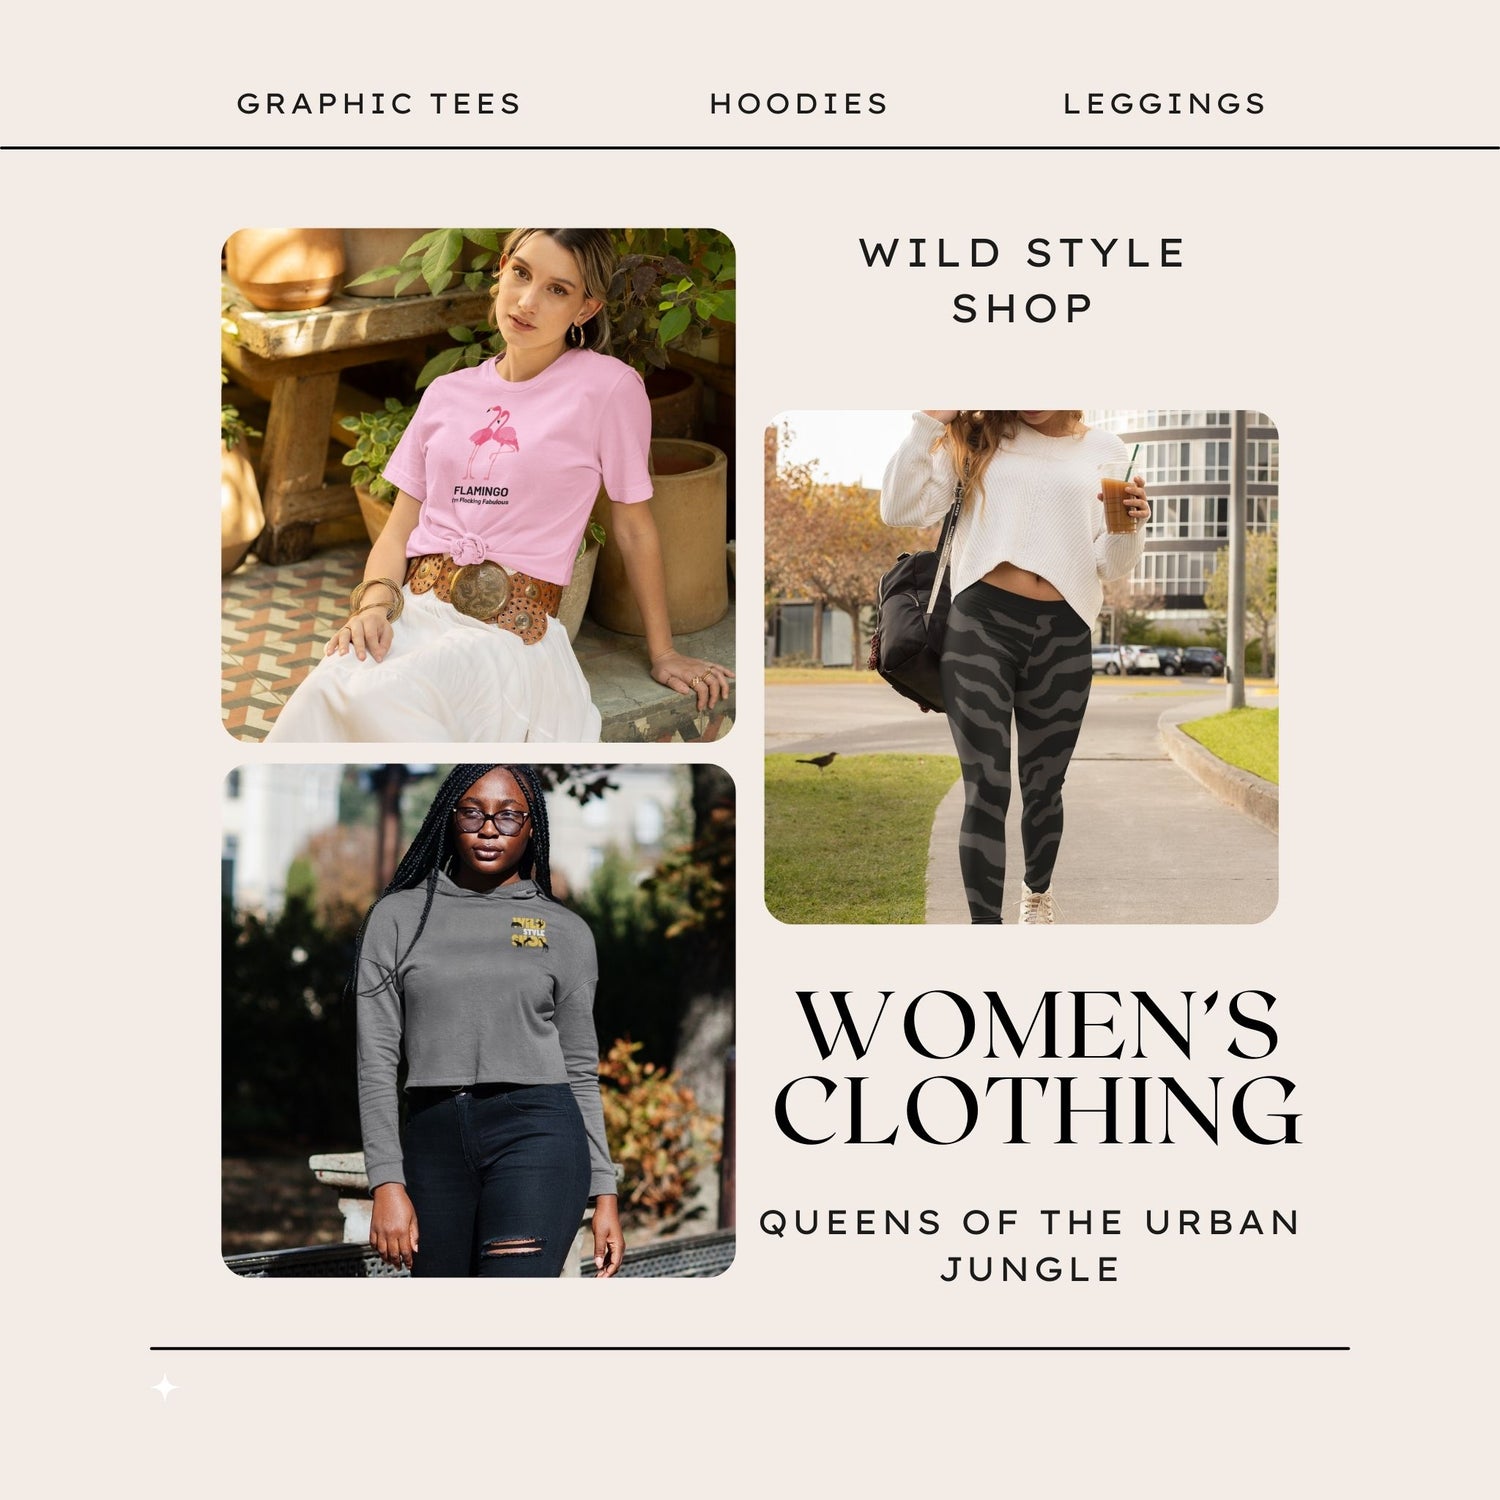 Women's Clothing. Women's Apparel. Wild Style Shop.